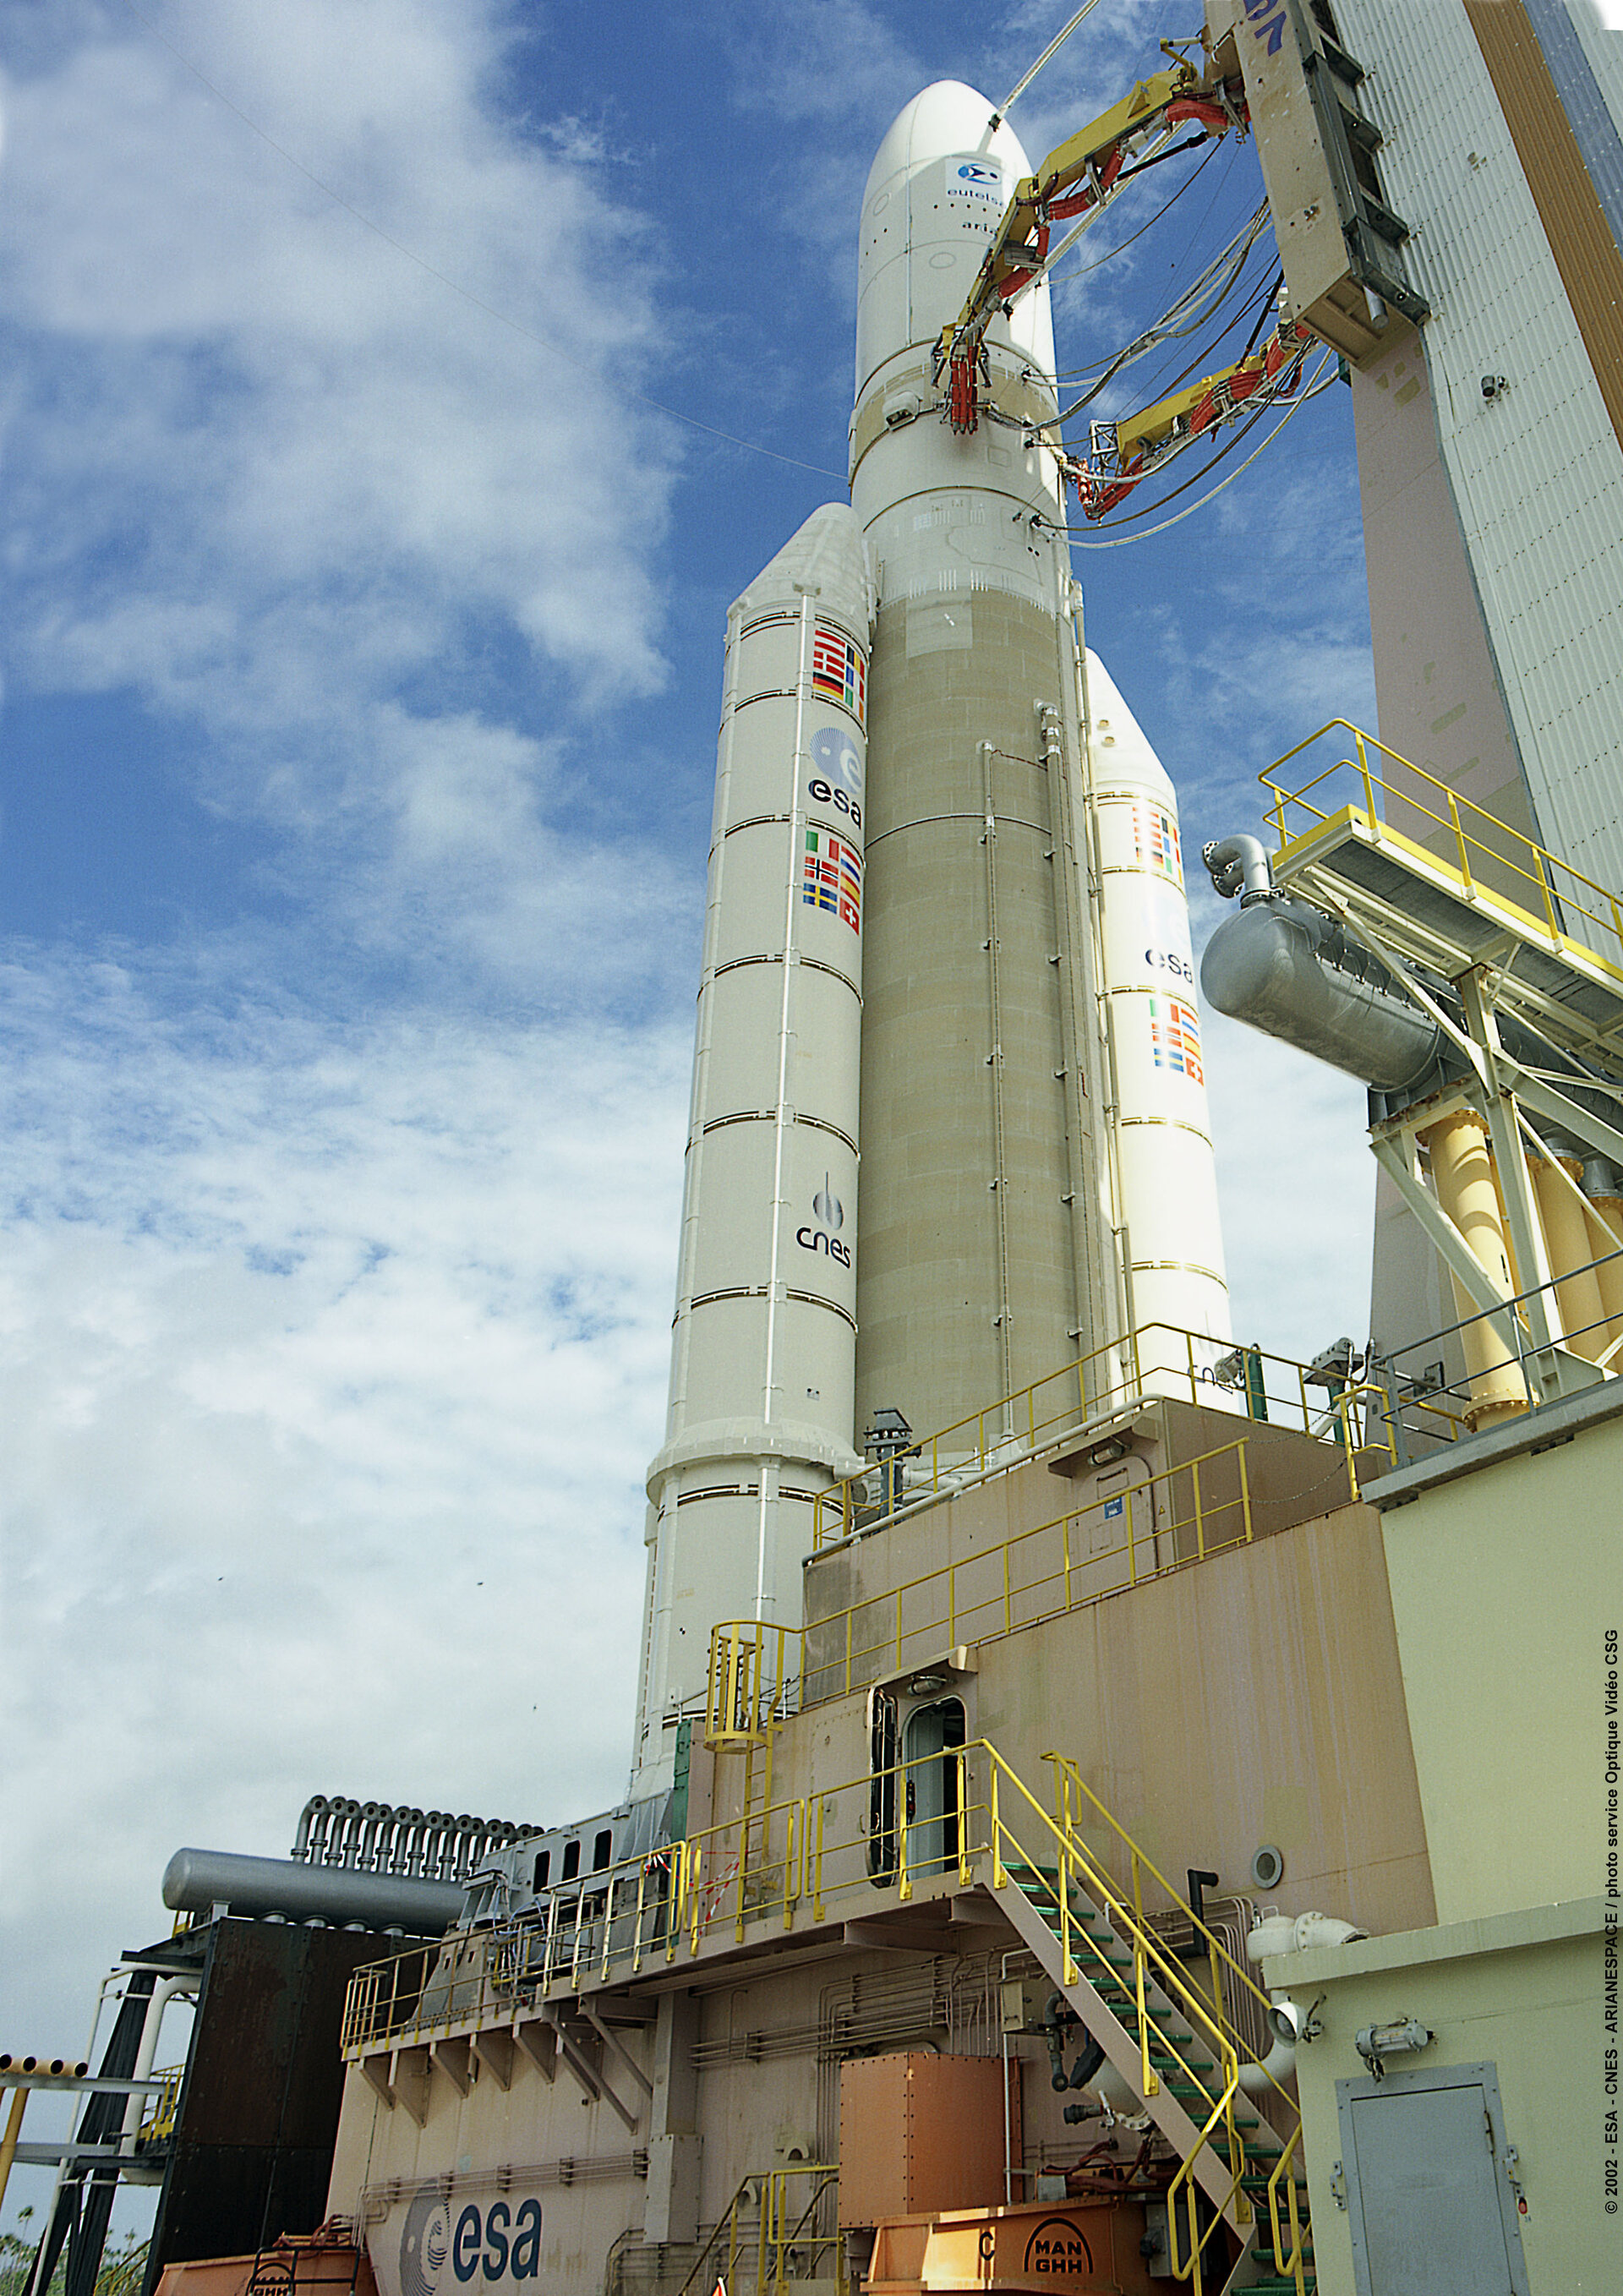 The Ariane 5 launcher